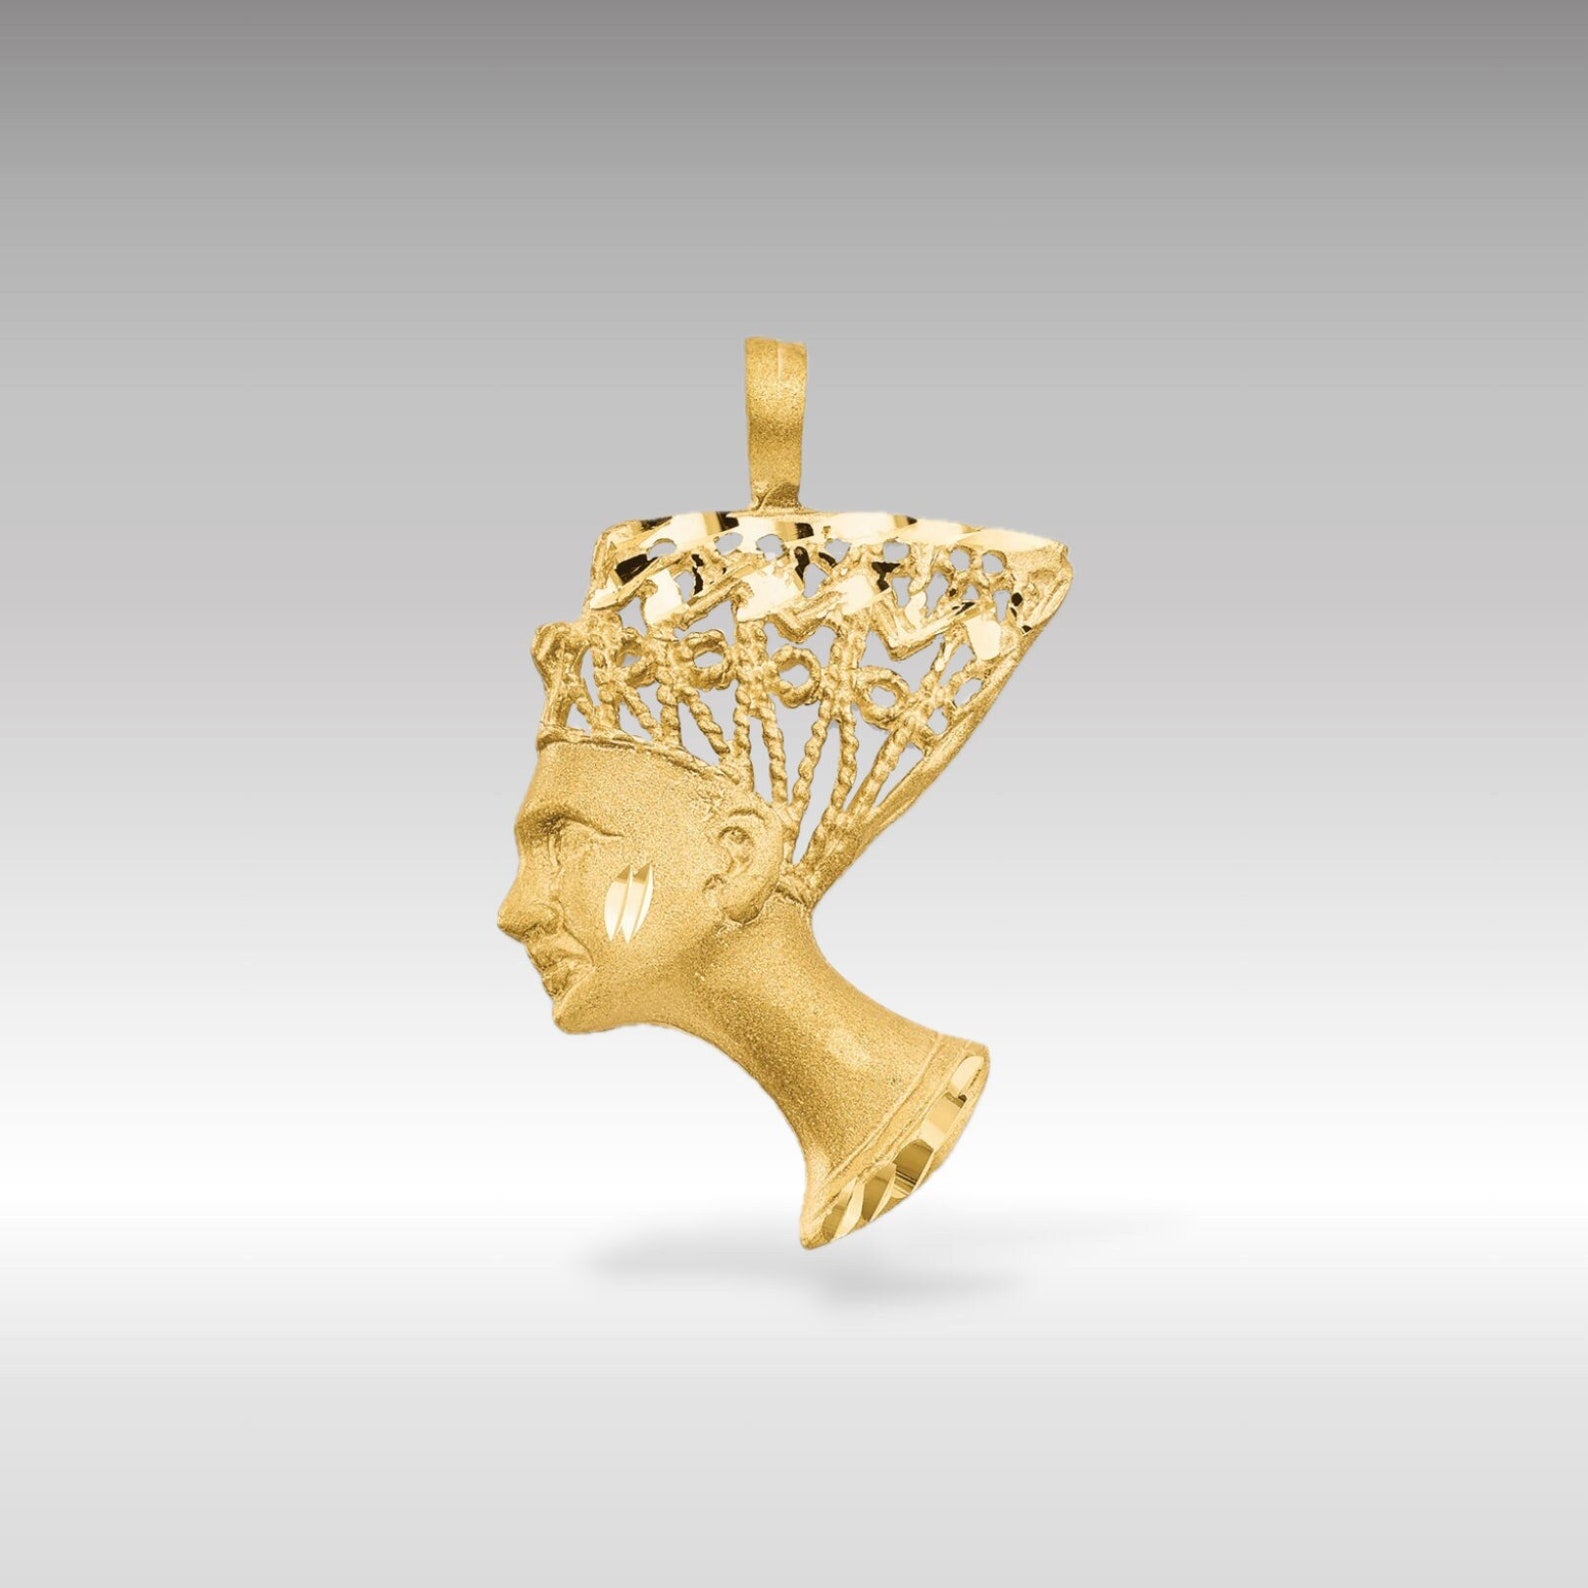 Gold Satin Finish Nefertiti Charm Model-C445 - Charlie & Co. Jewelry